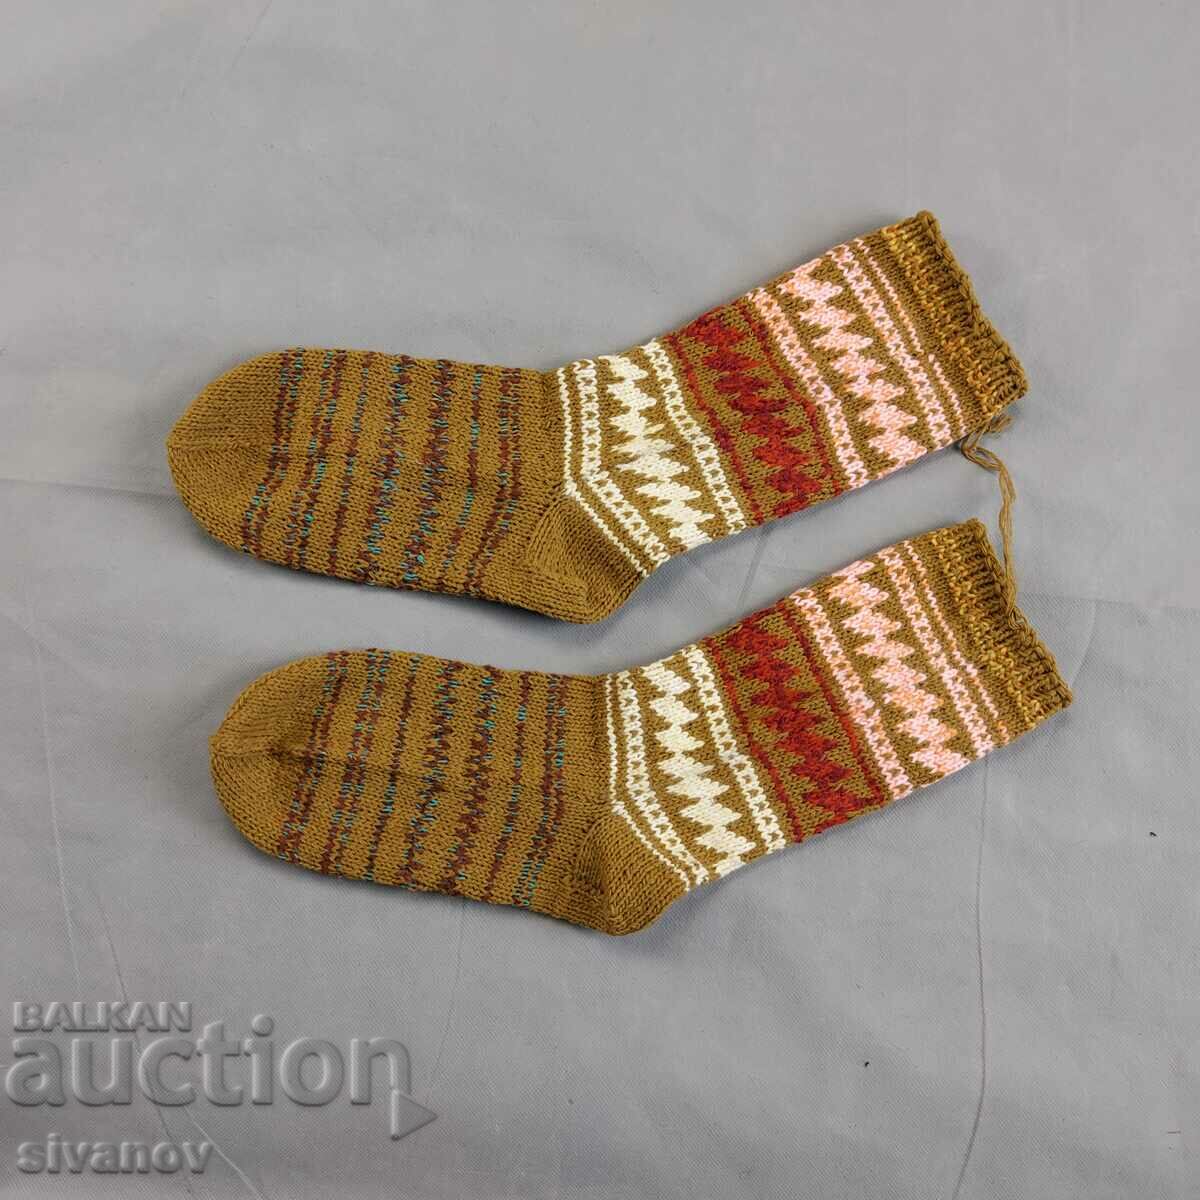 Wool socks for ethnic folklore costume #2355